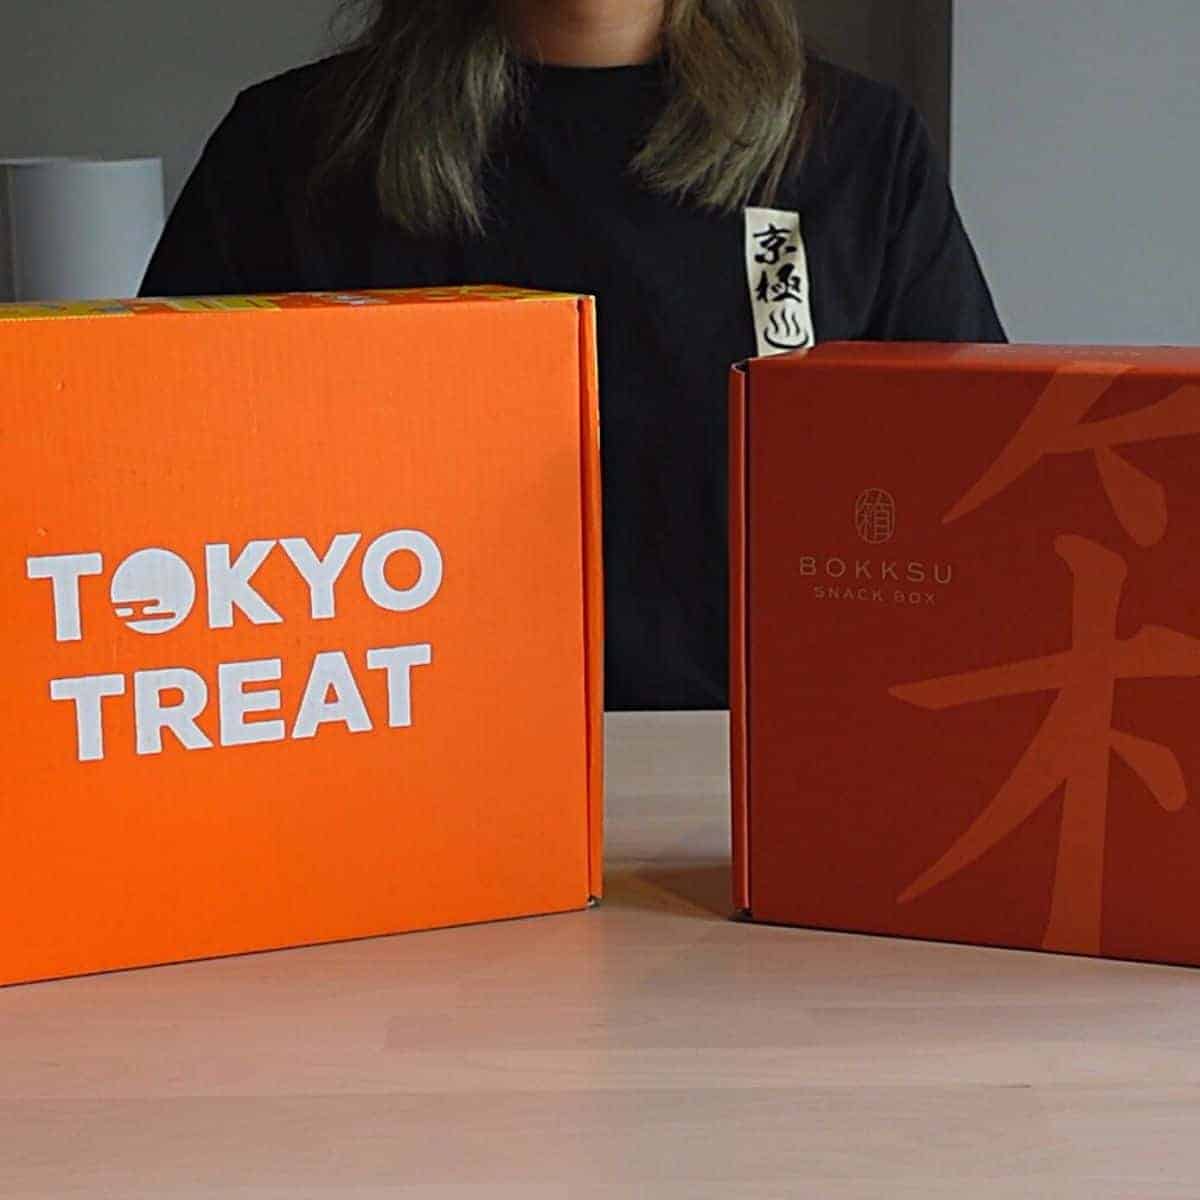 Tokyo Treat vs Bokksu review